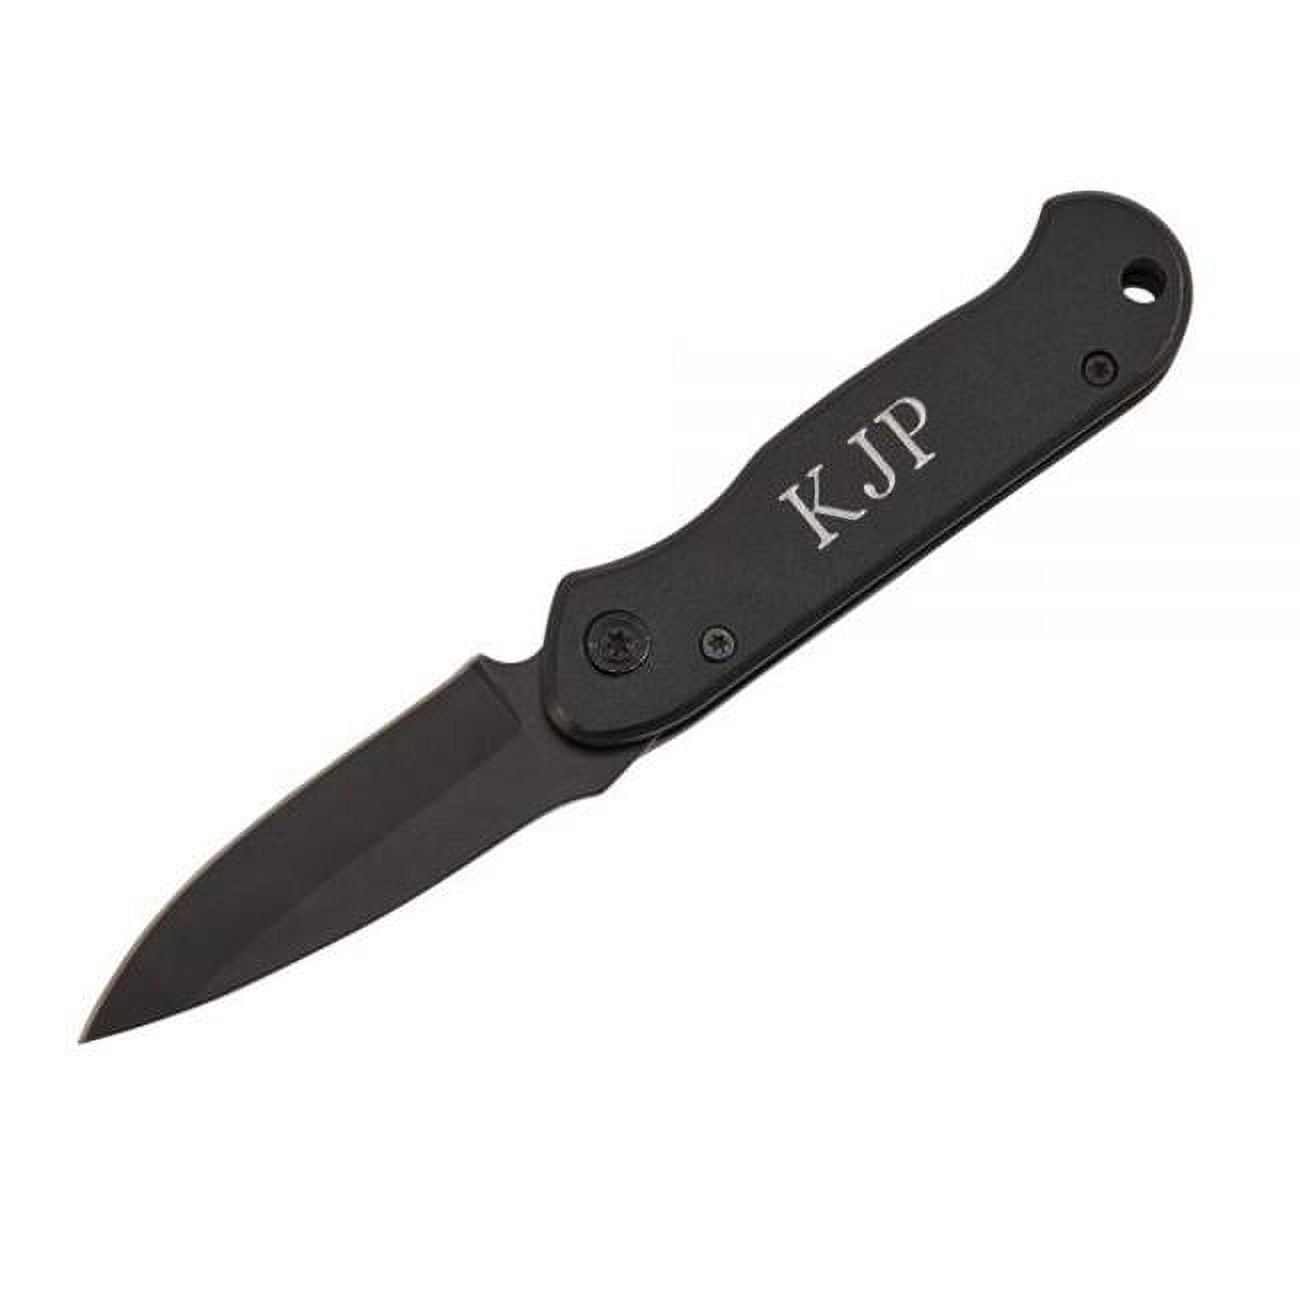 002410 3.5 In. All Black Locking Pocket Knife Closed - Black